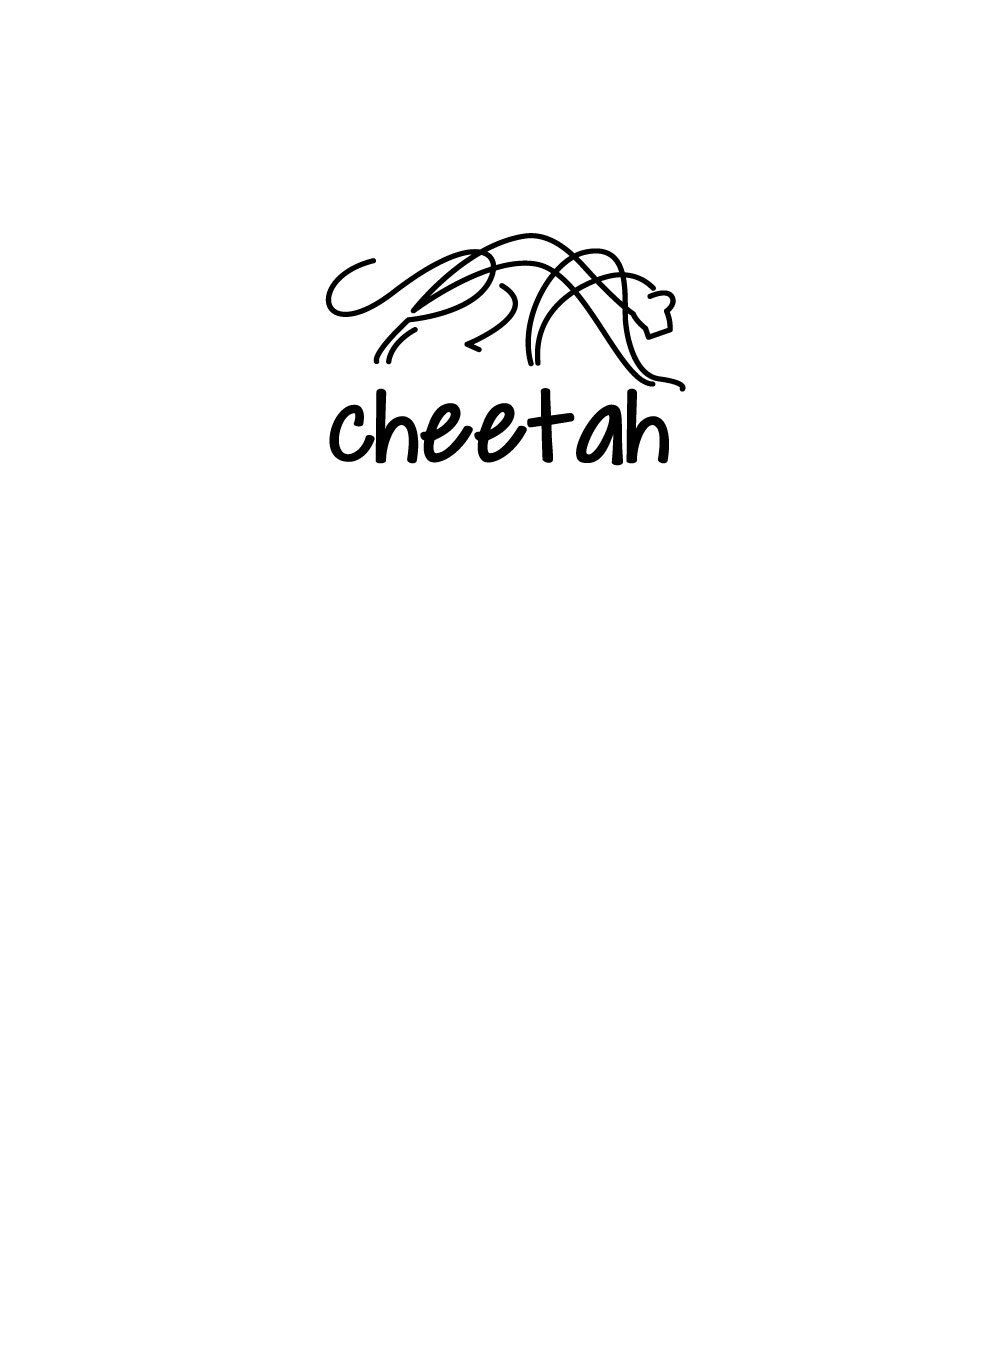 cheetah logo cover image.